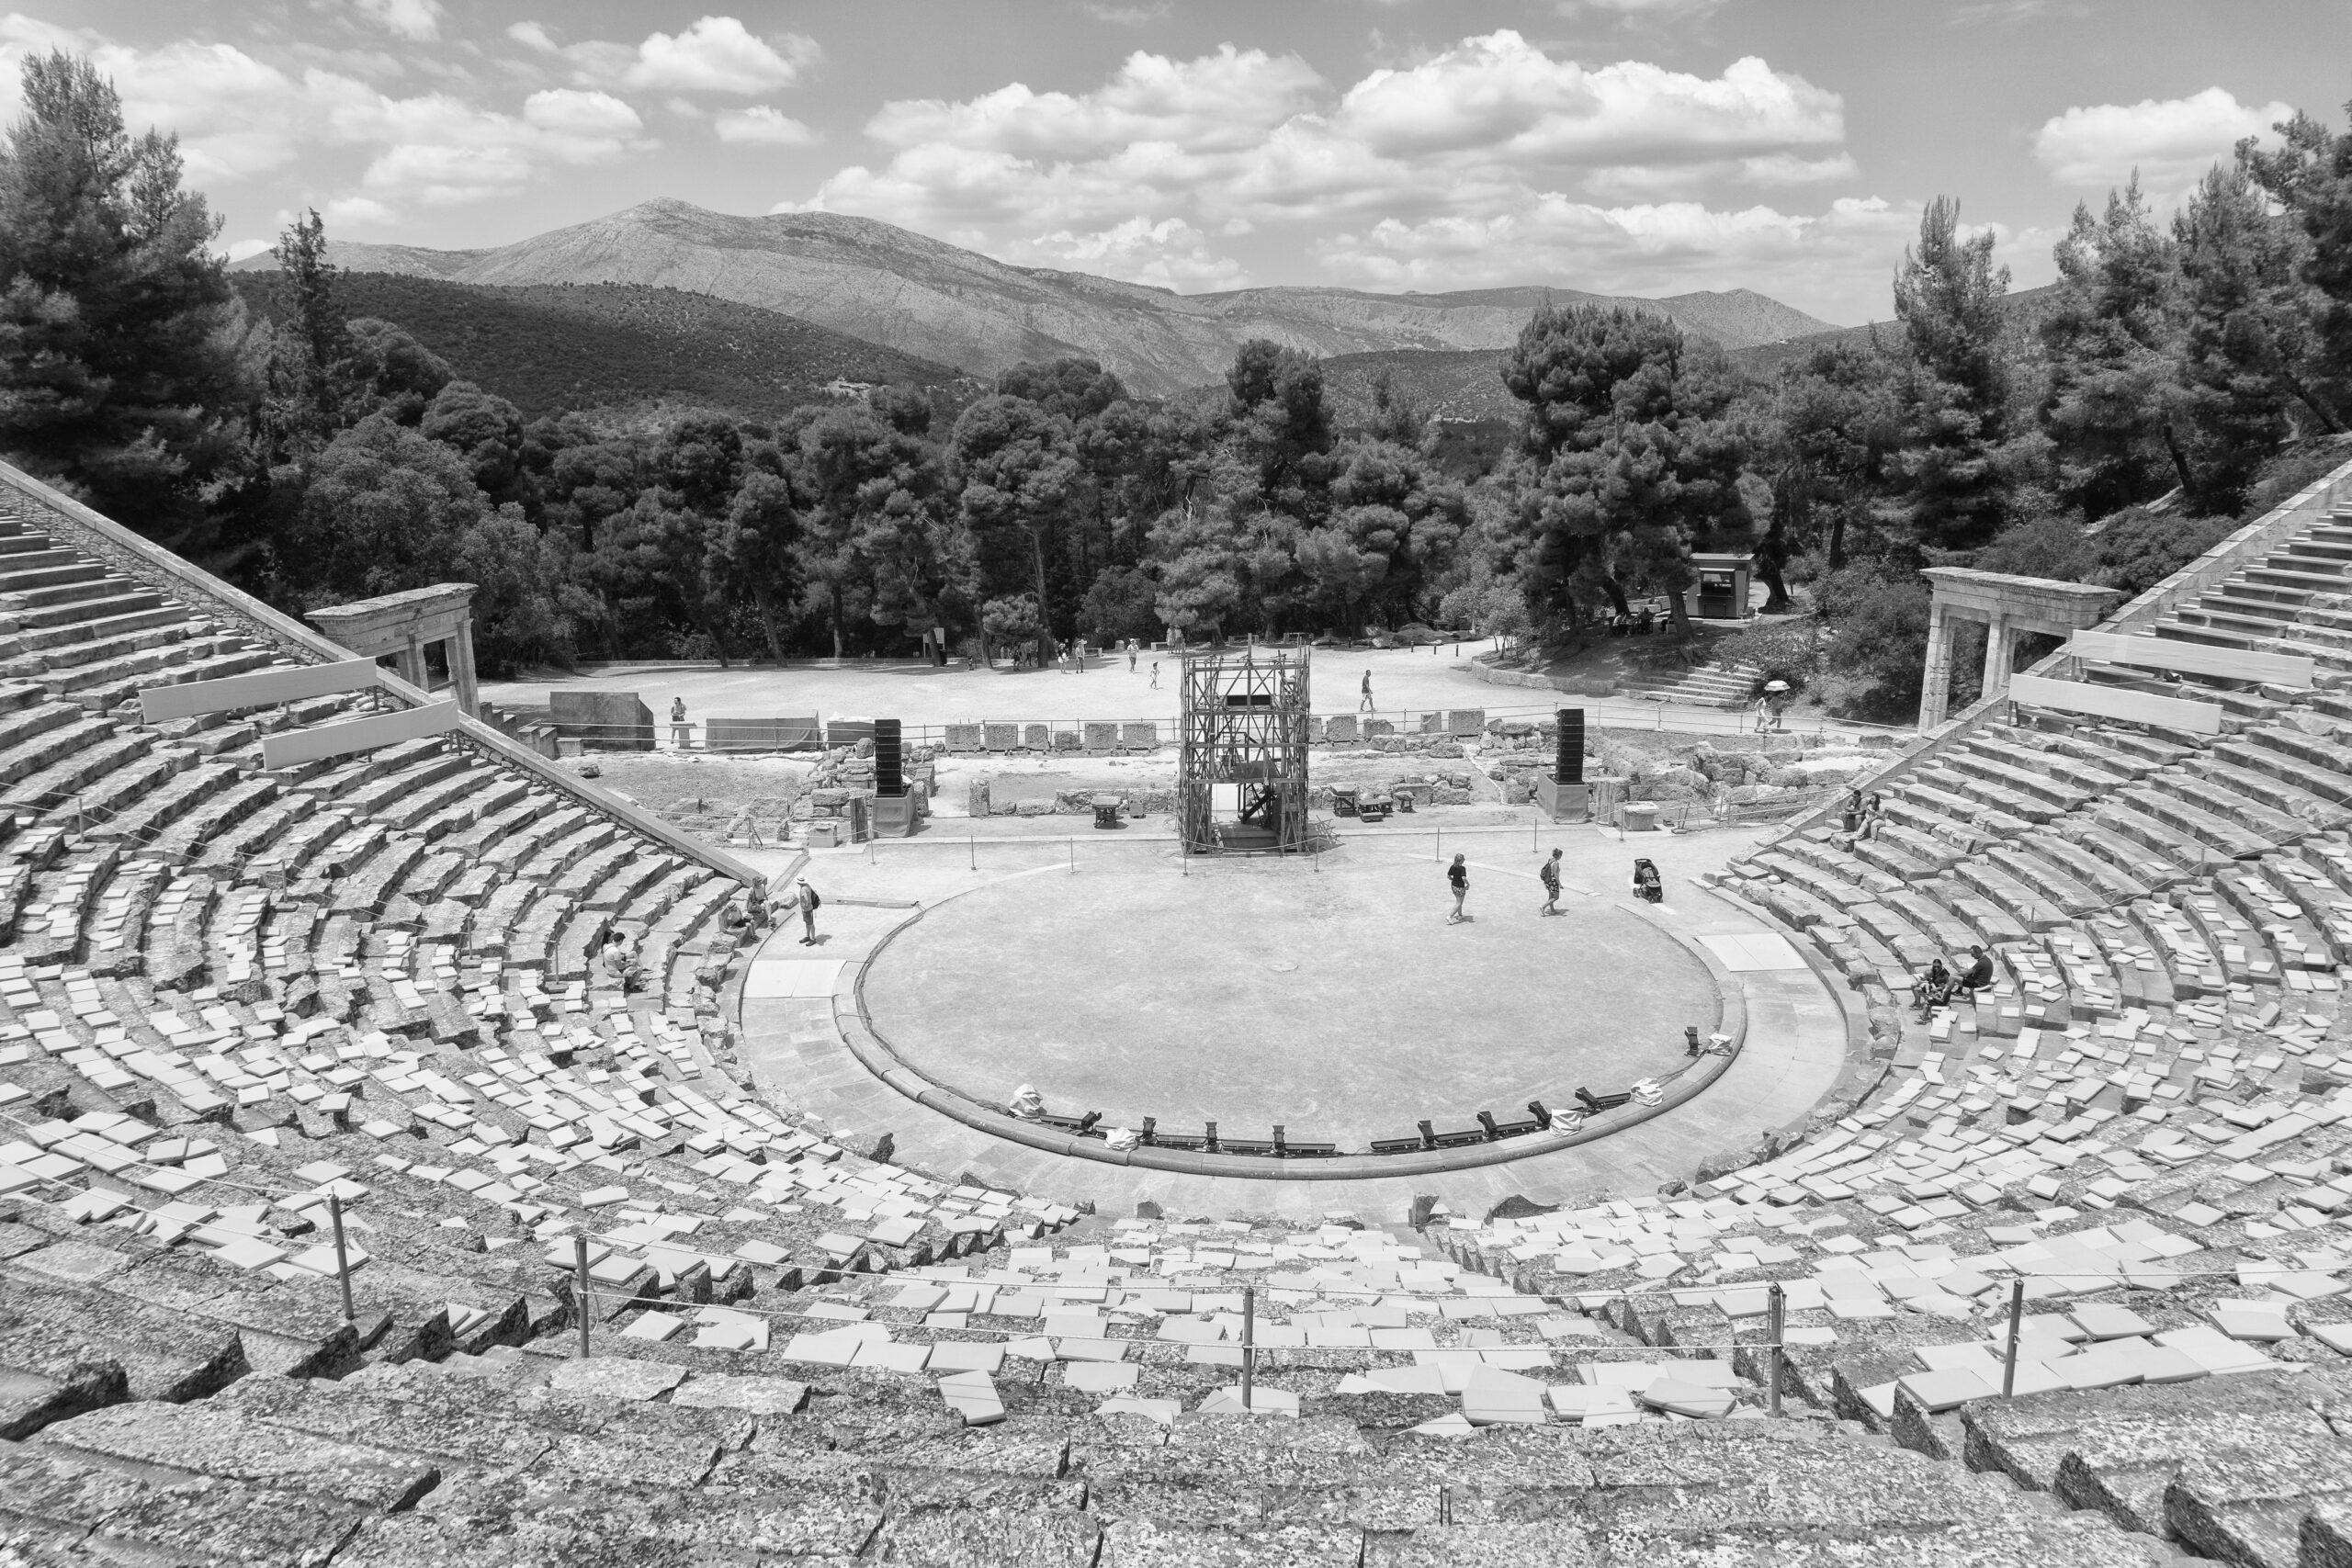 Marvel At The Epidaurus Theater On Our 7 Day Alternative Athens, Saronic Islands & Epidaurus Tour Package